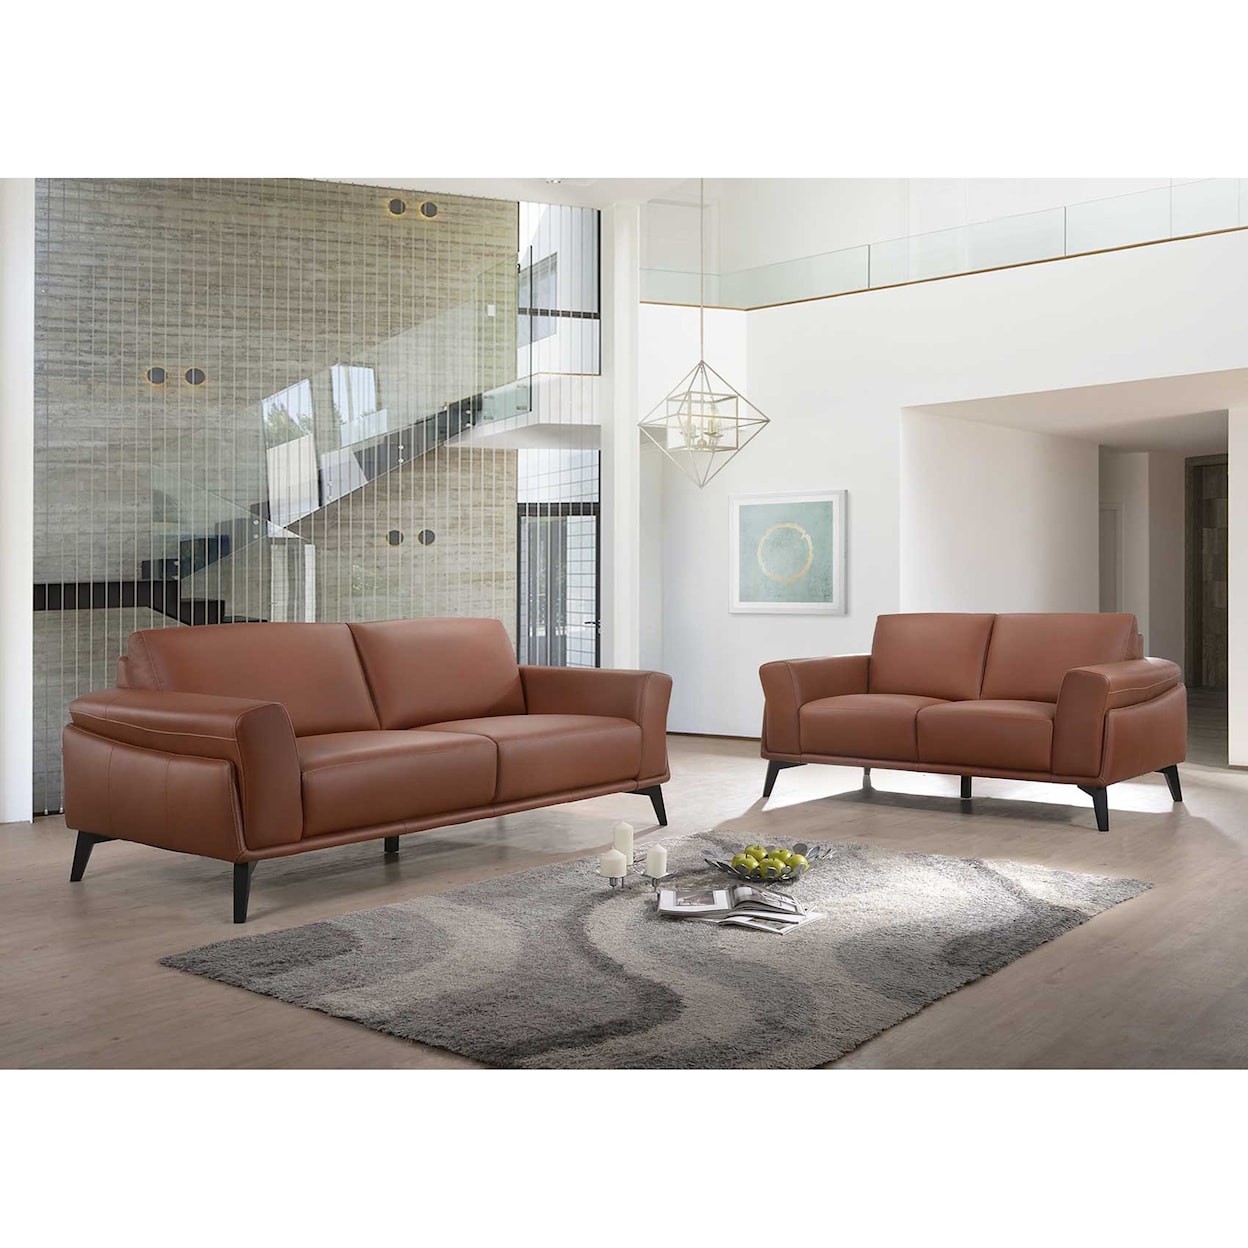 New Classic Furniture Como Stationary Living Room Group